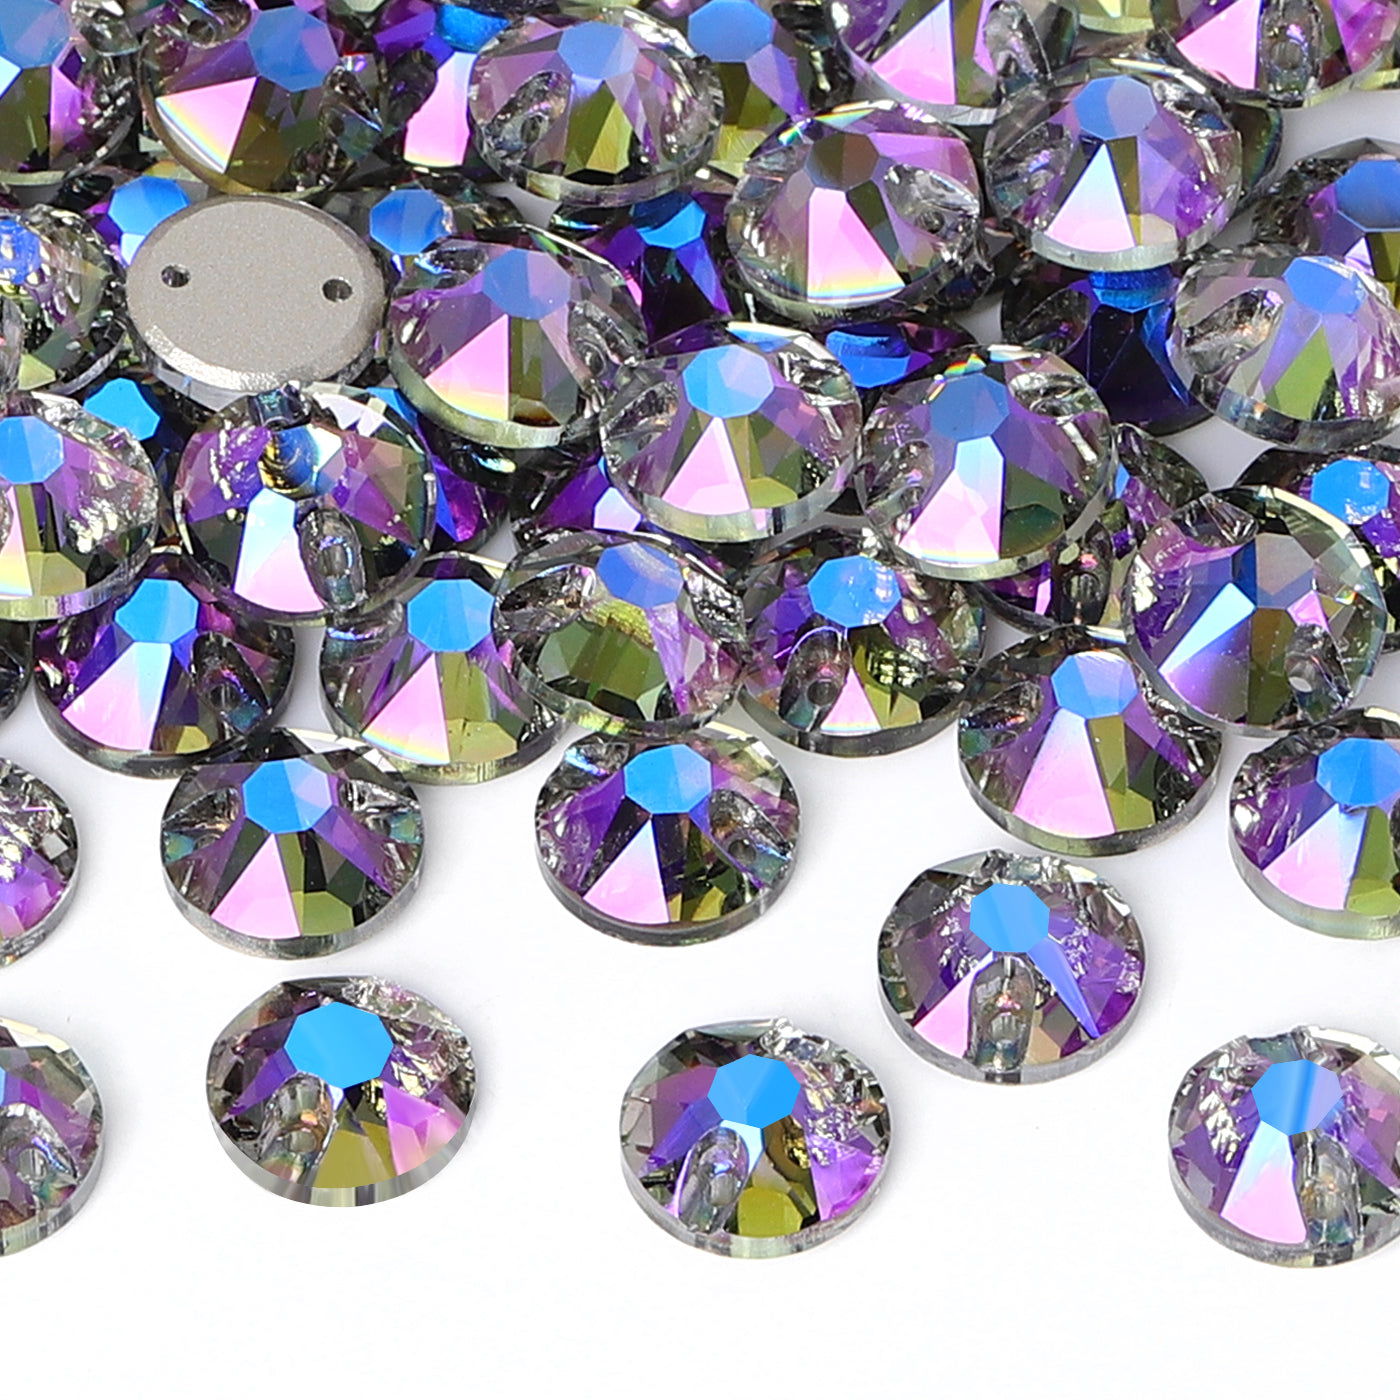 Black Diamond Shimmer XIRIUS Round Shape High Quality Glass Sew-on Rhinestones